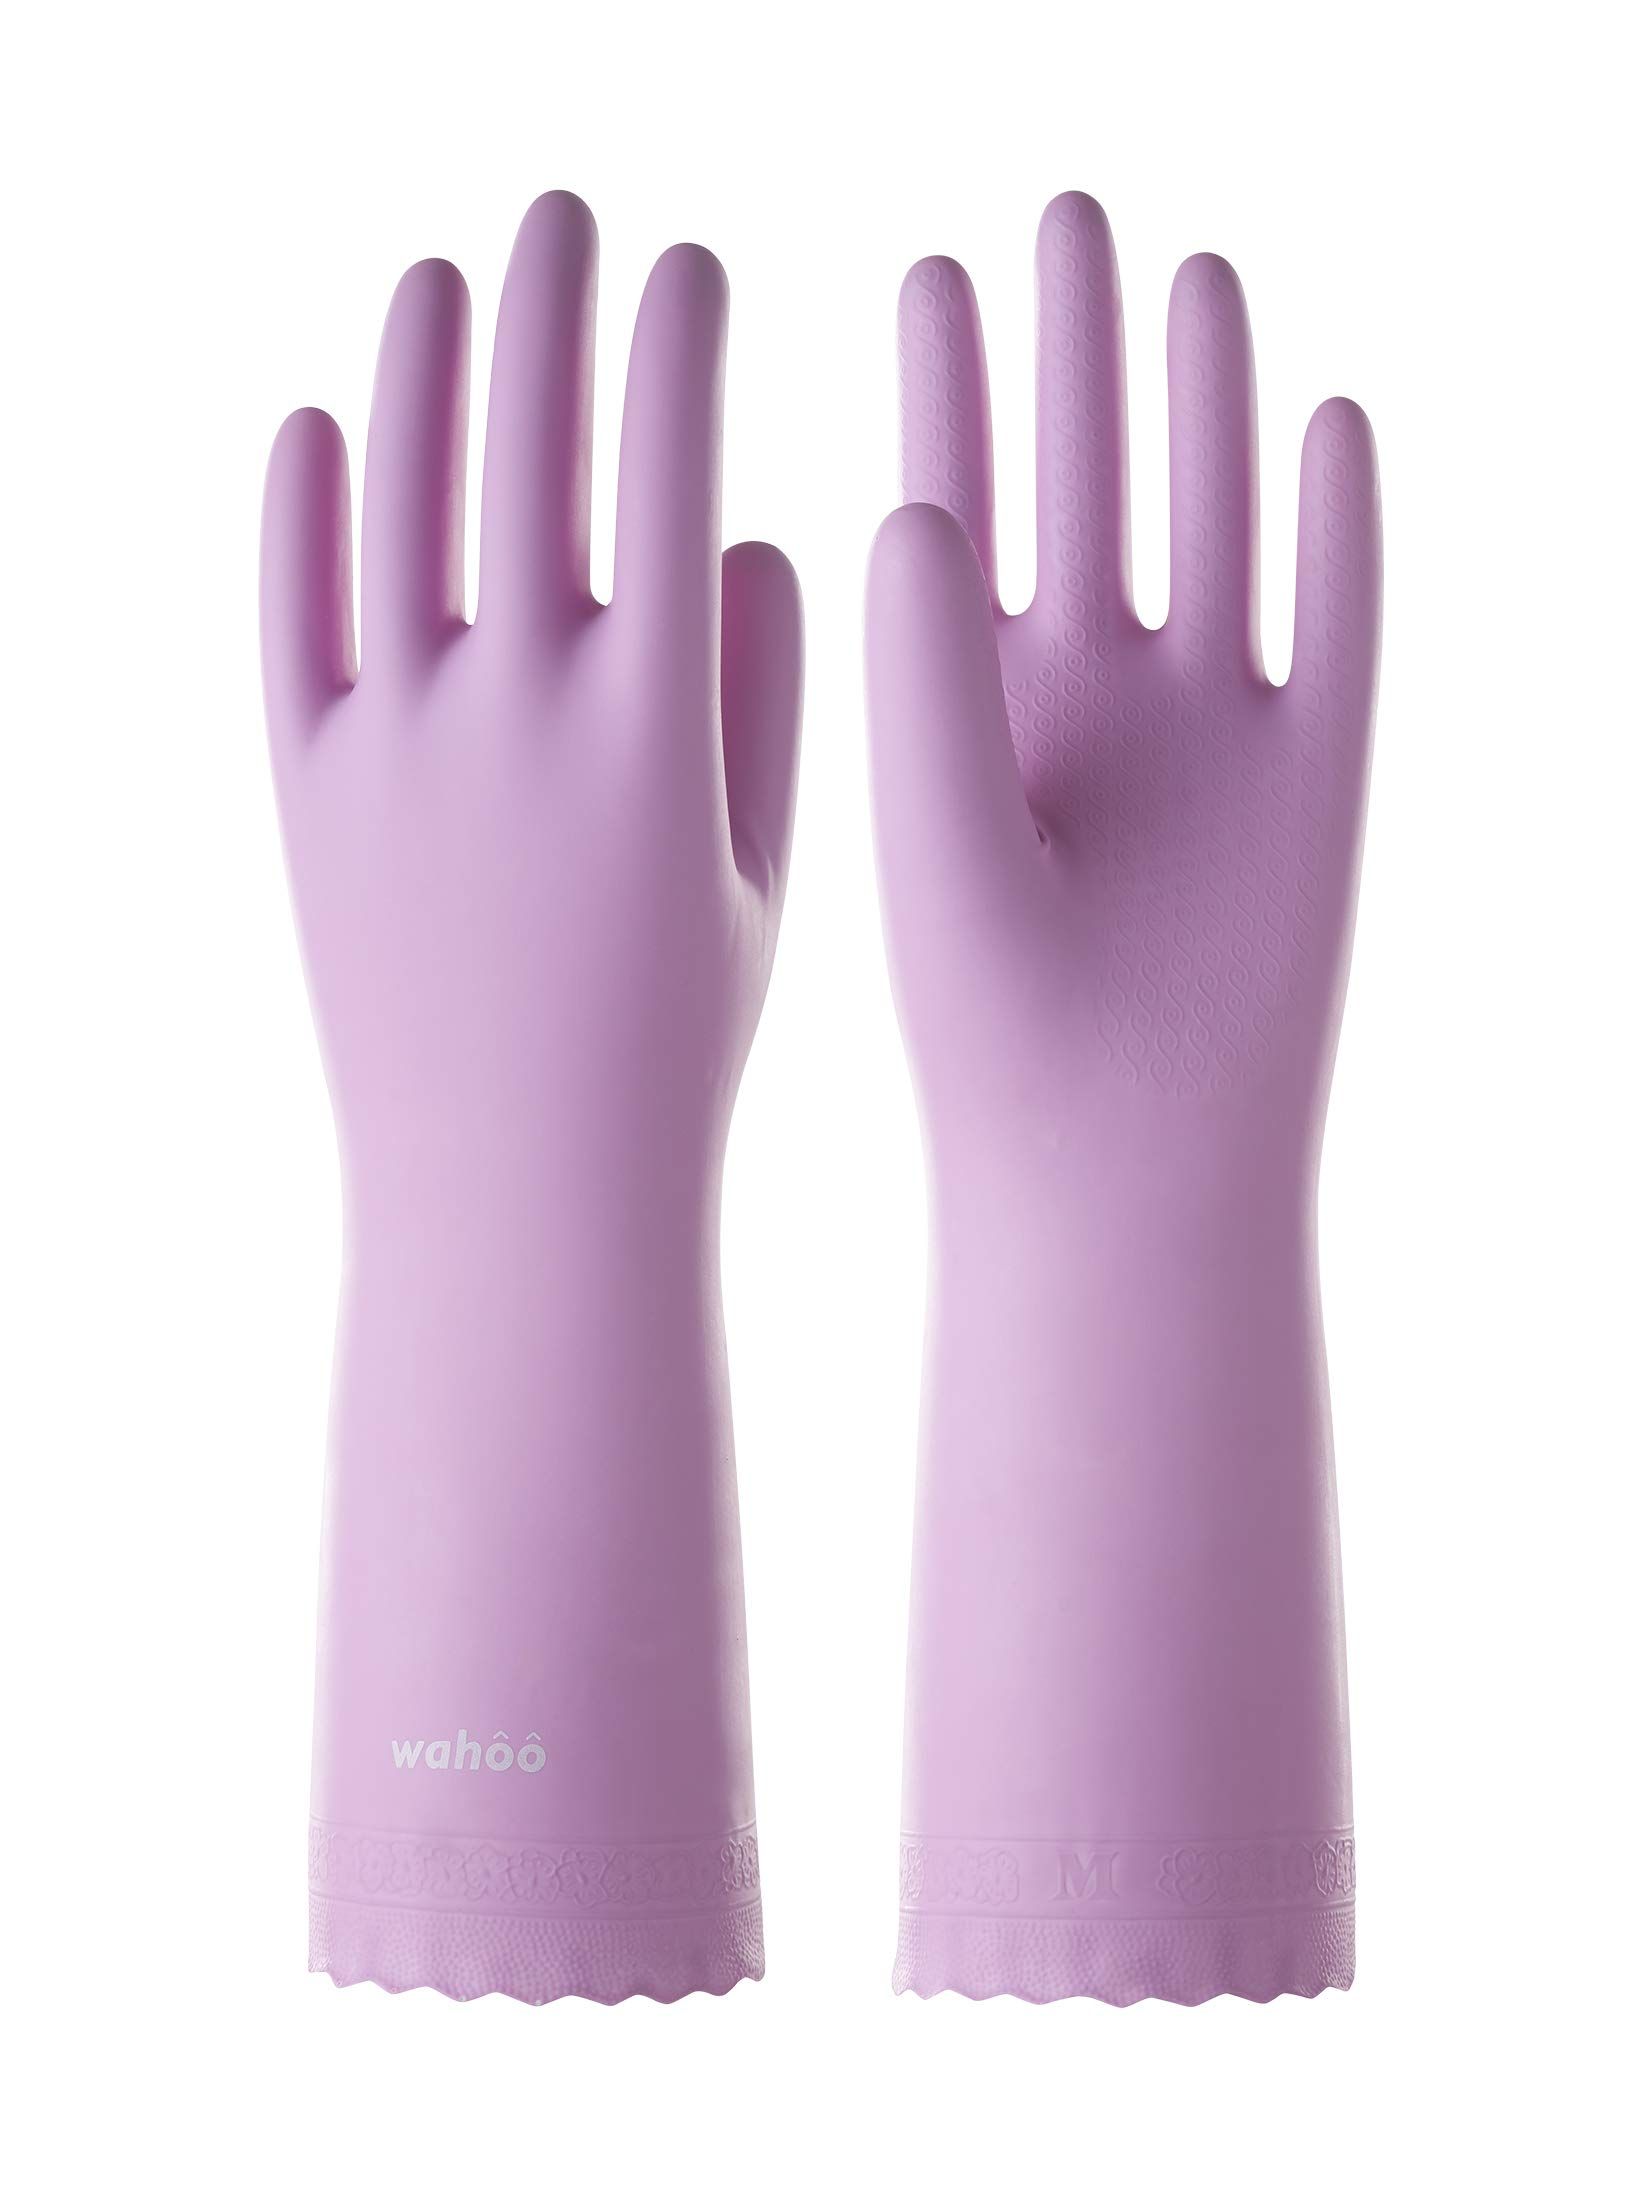 Wahoo PVC Dishwashing Cleaning Gloves, Skin-Friendly, Reusable Kitchen Gloves with Cotton Flocked Li | Amazon (US)